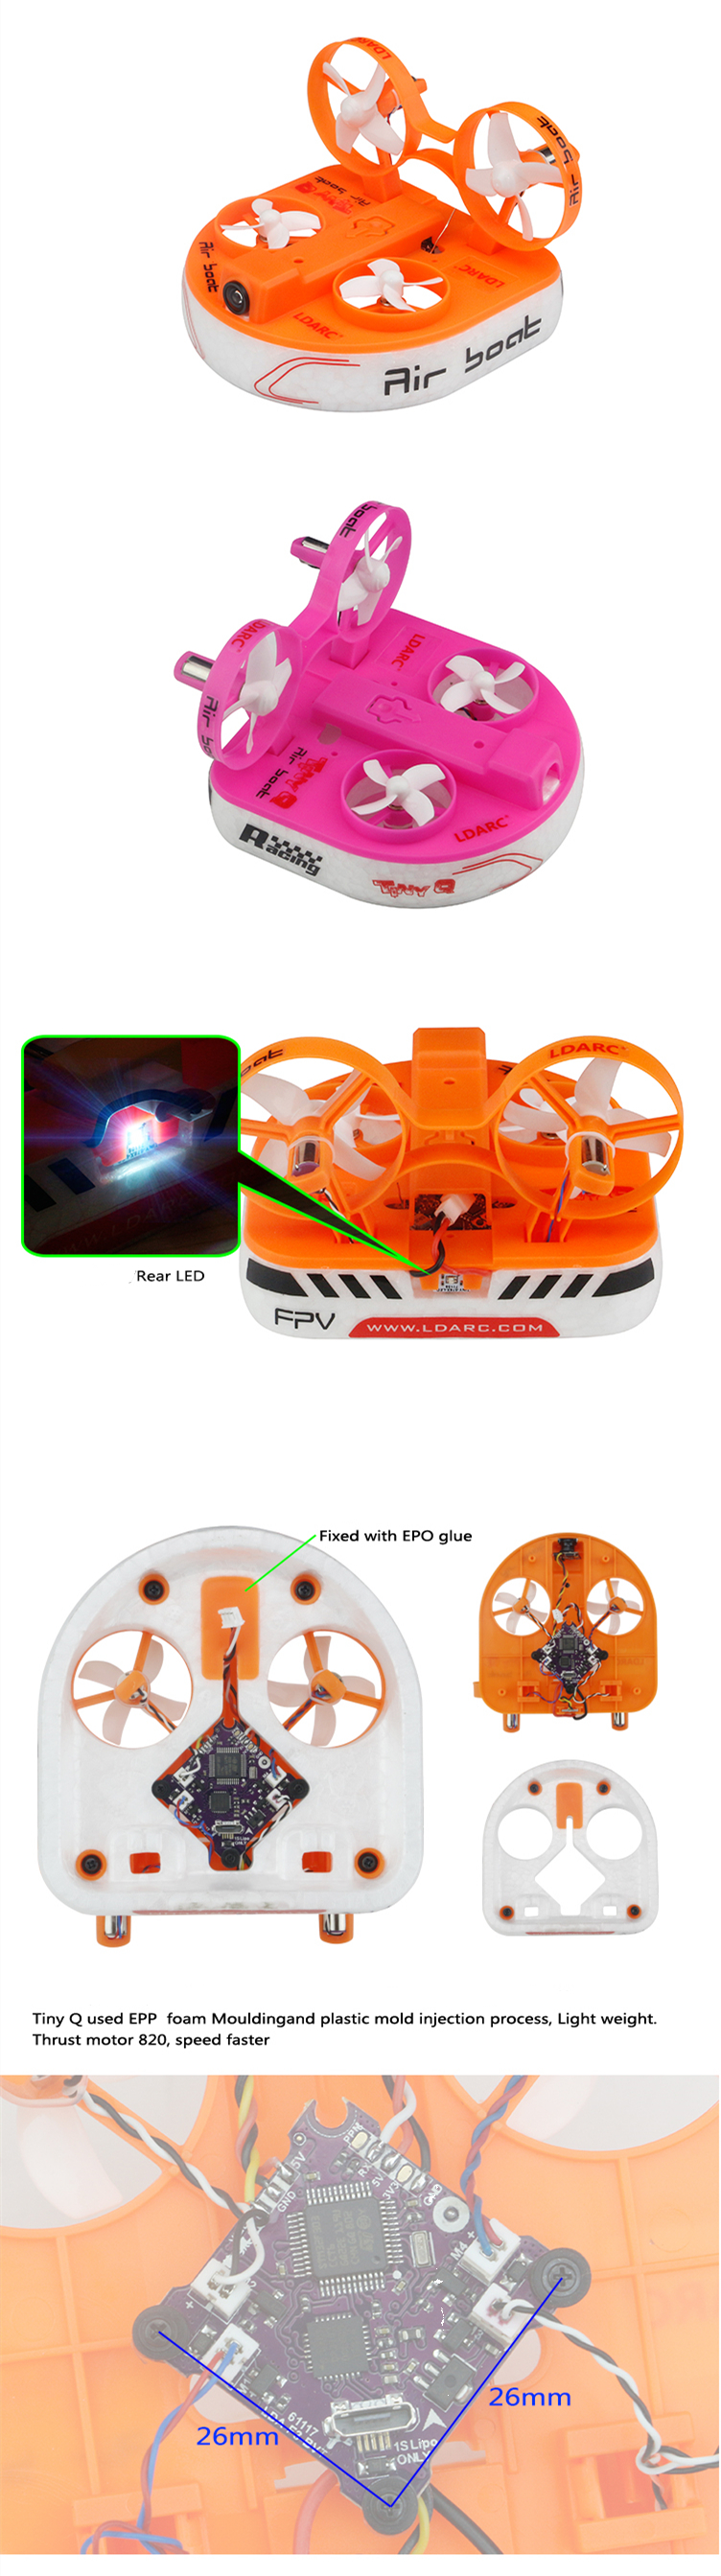 KINGKONGLDARC-Tiny-Q-FPV-Air-Boat-RC-Quadcopter-With-58G-800TVL-Camera-F3-Flight-Controller-PNP-1336948-1